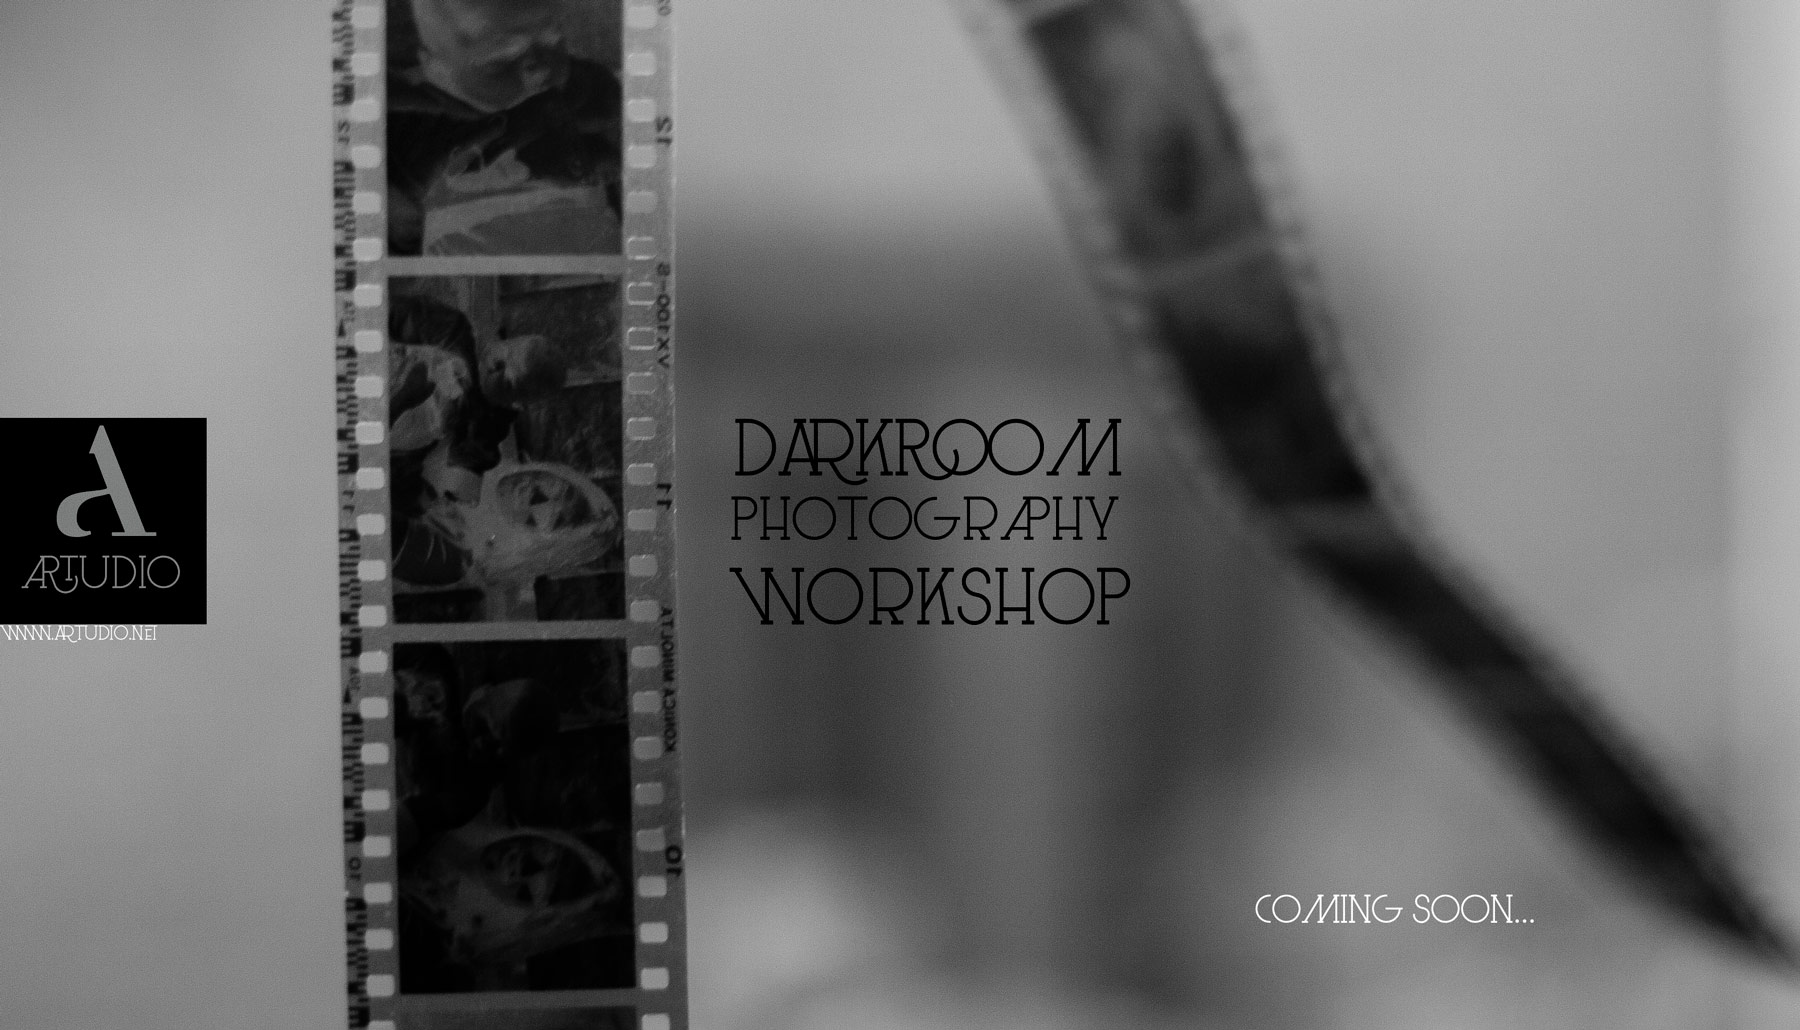 DARKROOM PHOTOGRAPHY WORKSHOP COMING SOON @ ARTUDIO post thumbnail image